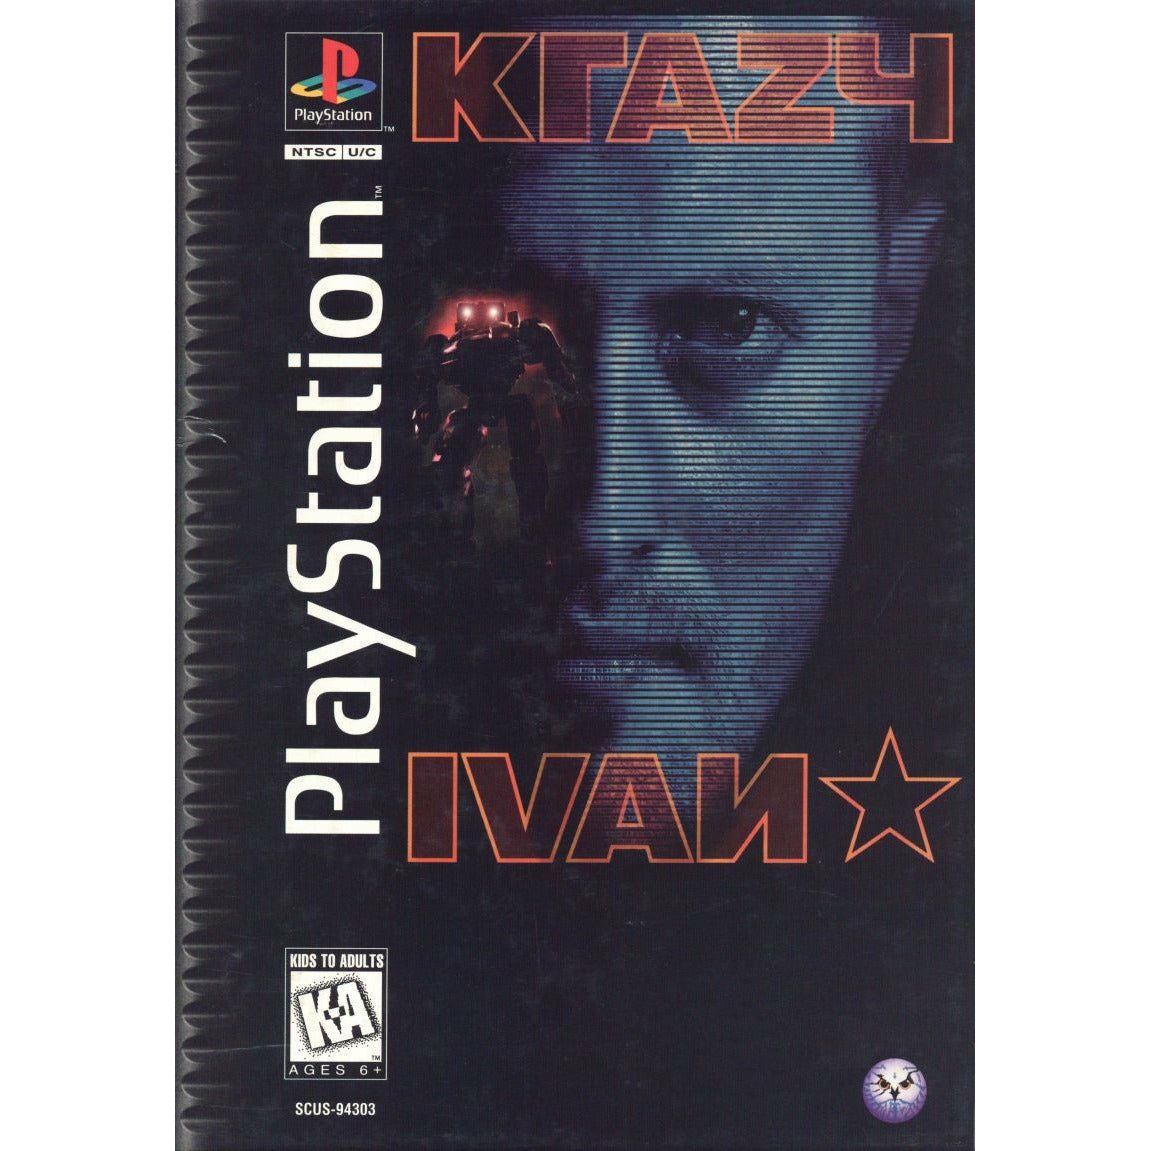 PS1 - Krazy Ivan (Long Box)